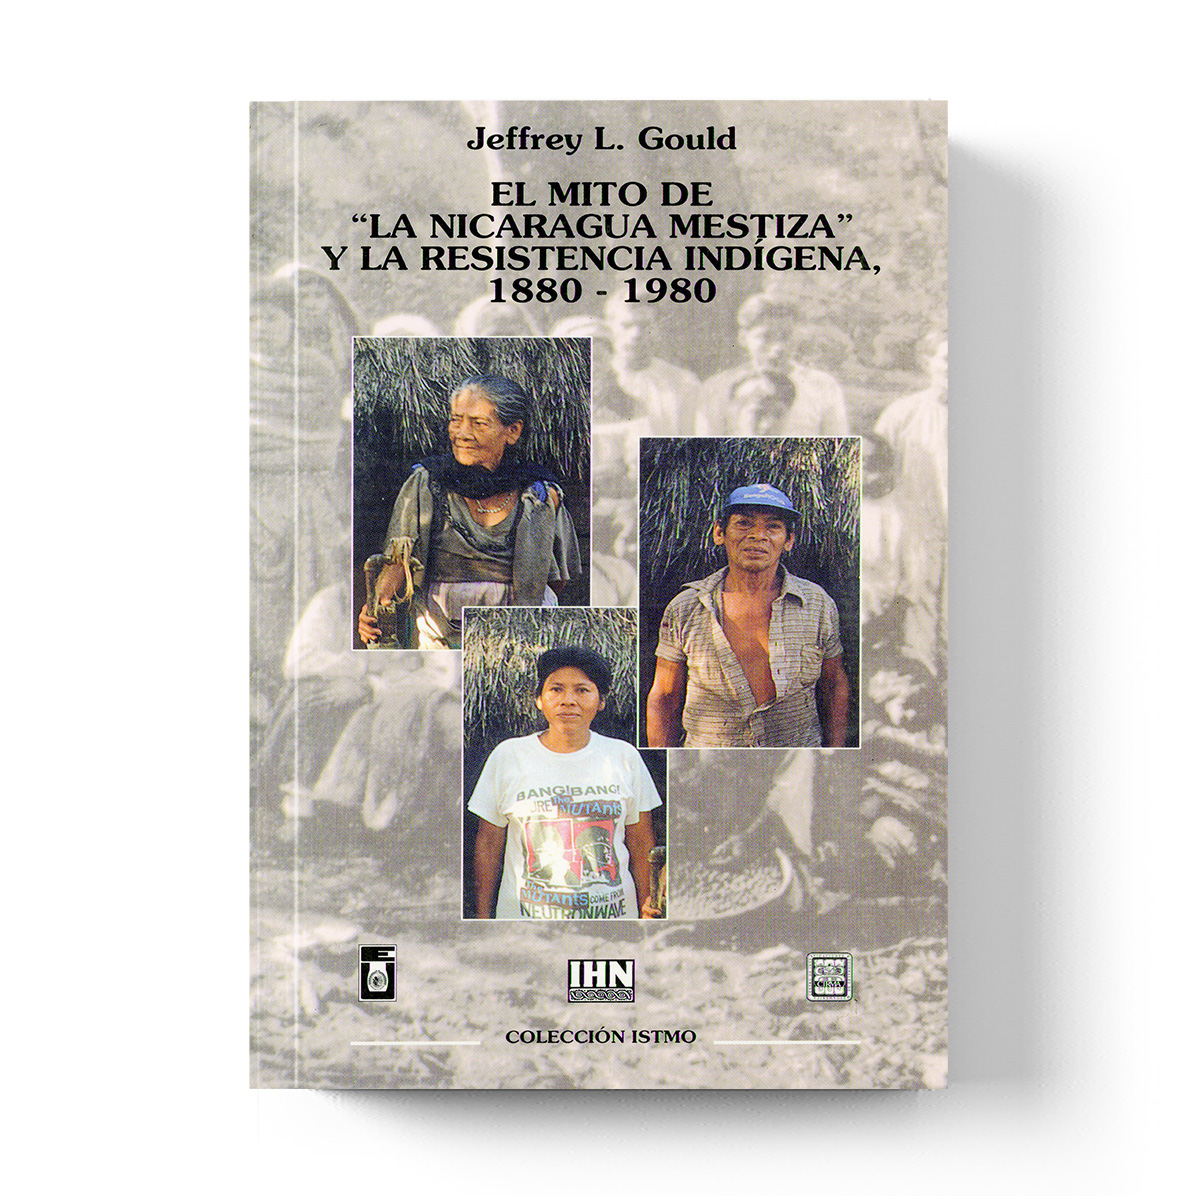 El mito de la Nicaragua mestiza